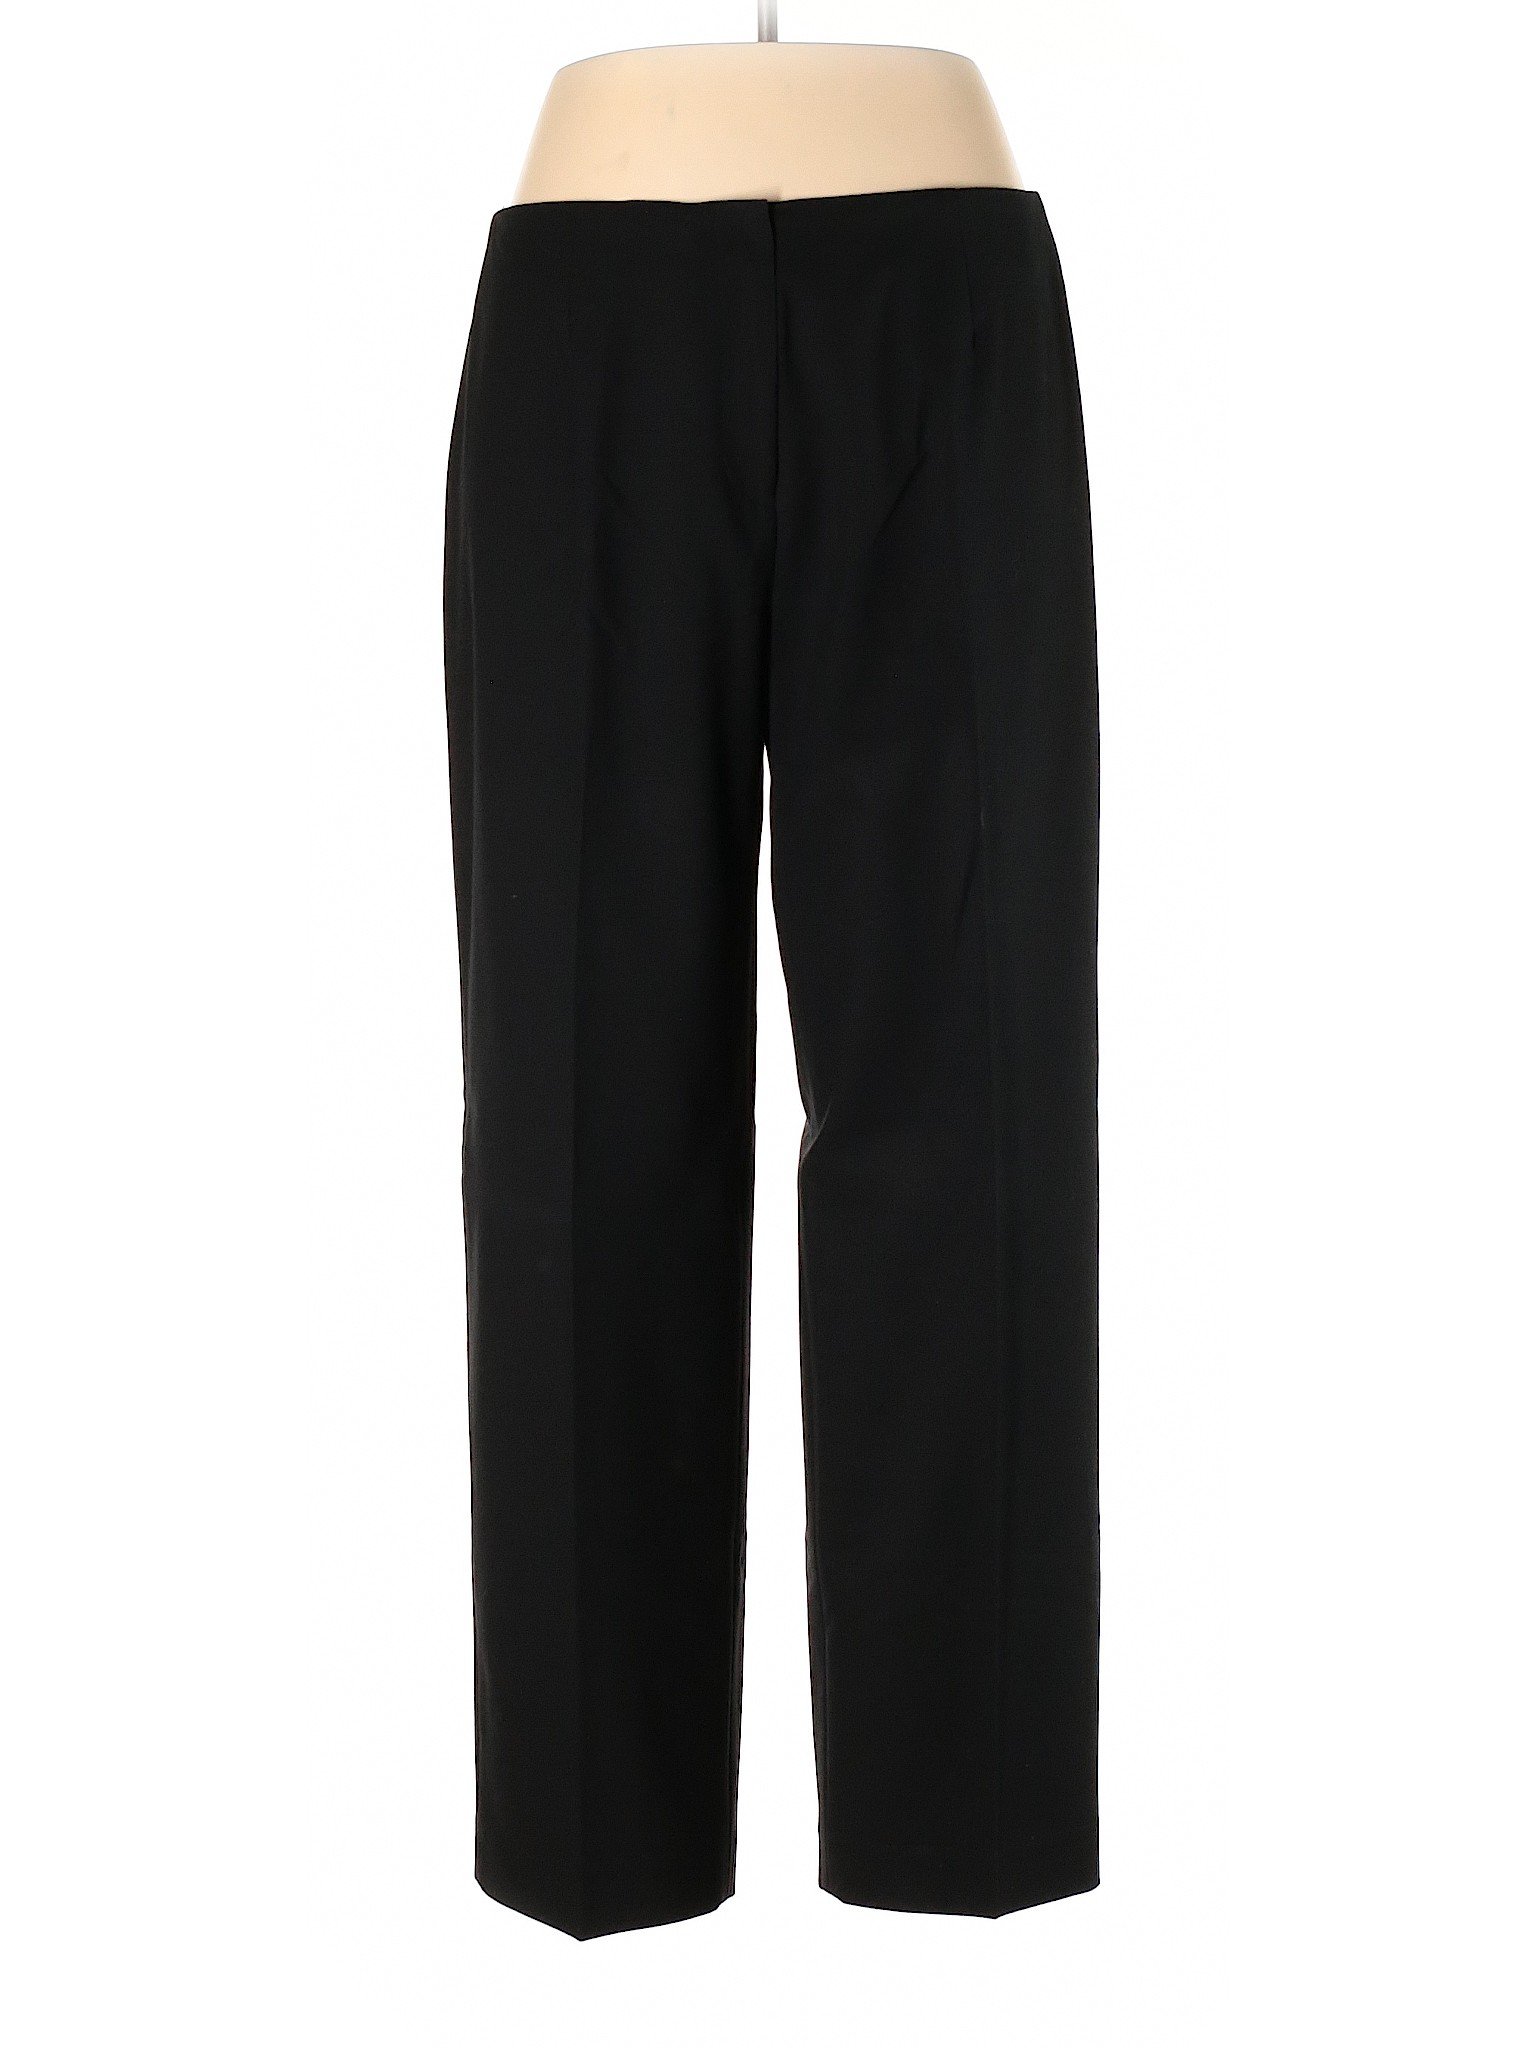 Elliott Lauren Women Black Dress Pants 14 | eBay